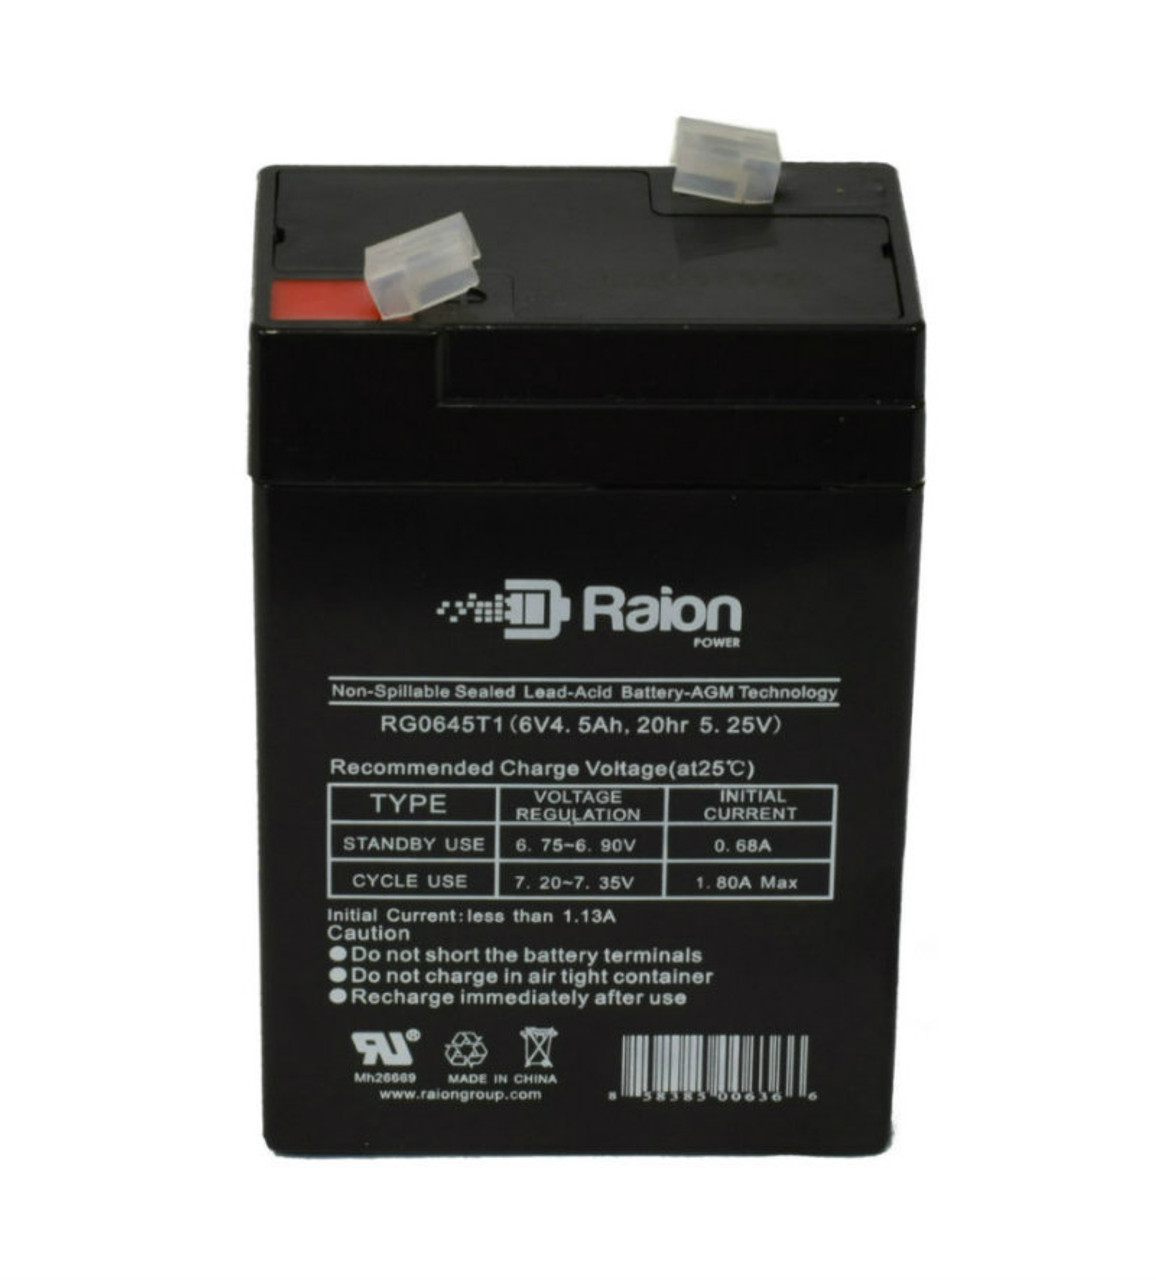 Raion Power RG0645T1 Replacement Battery Cartridge for Ya Heng 3FM4.5